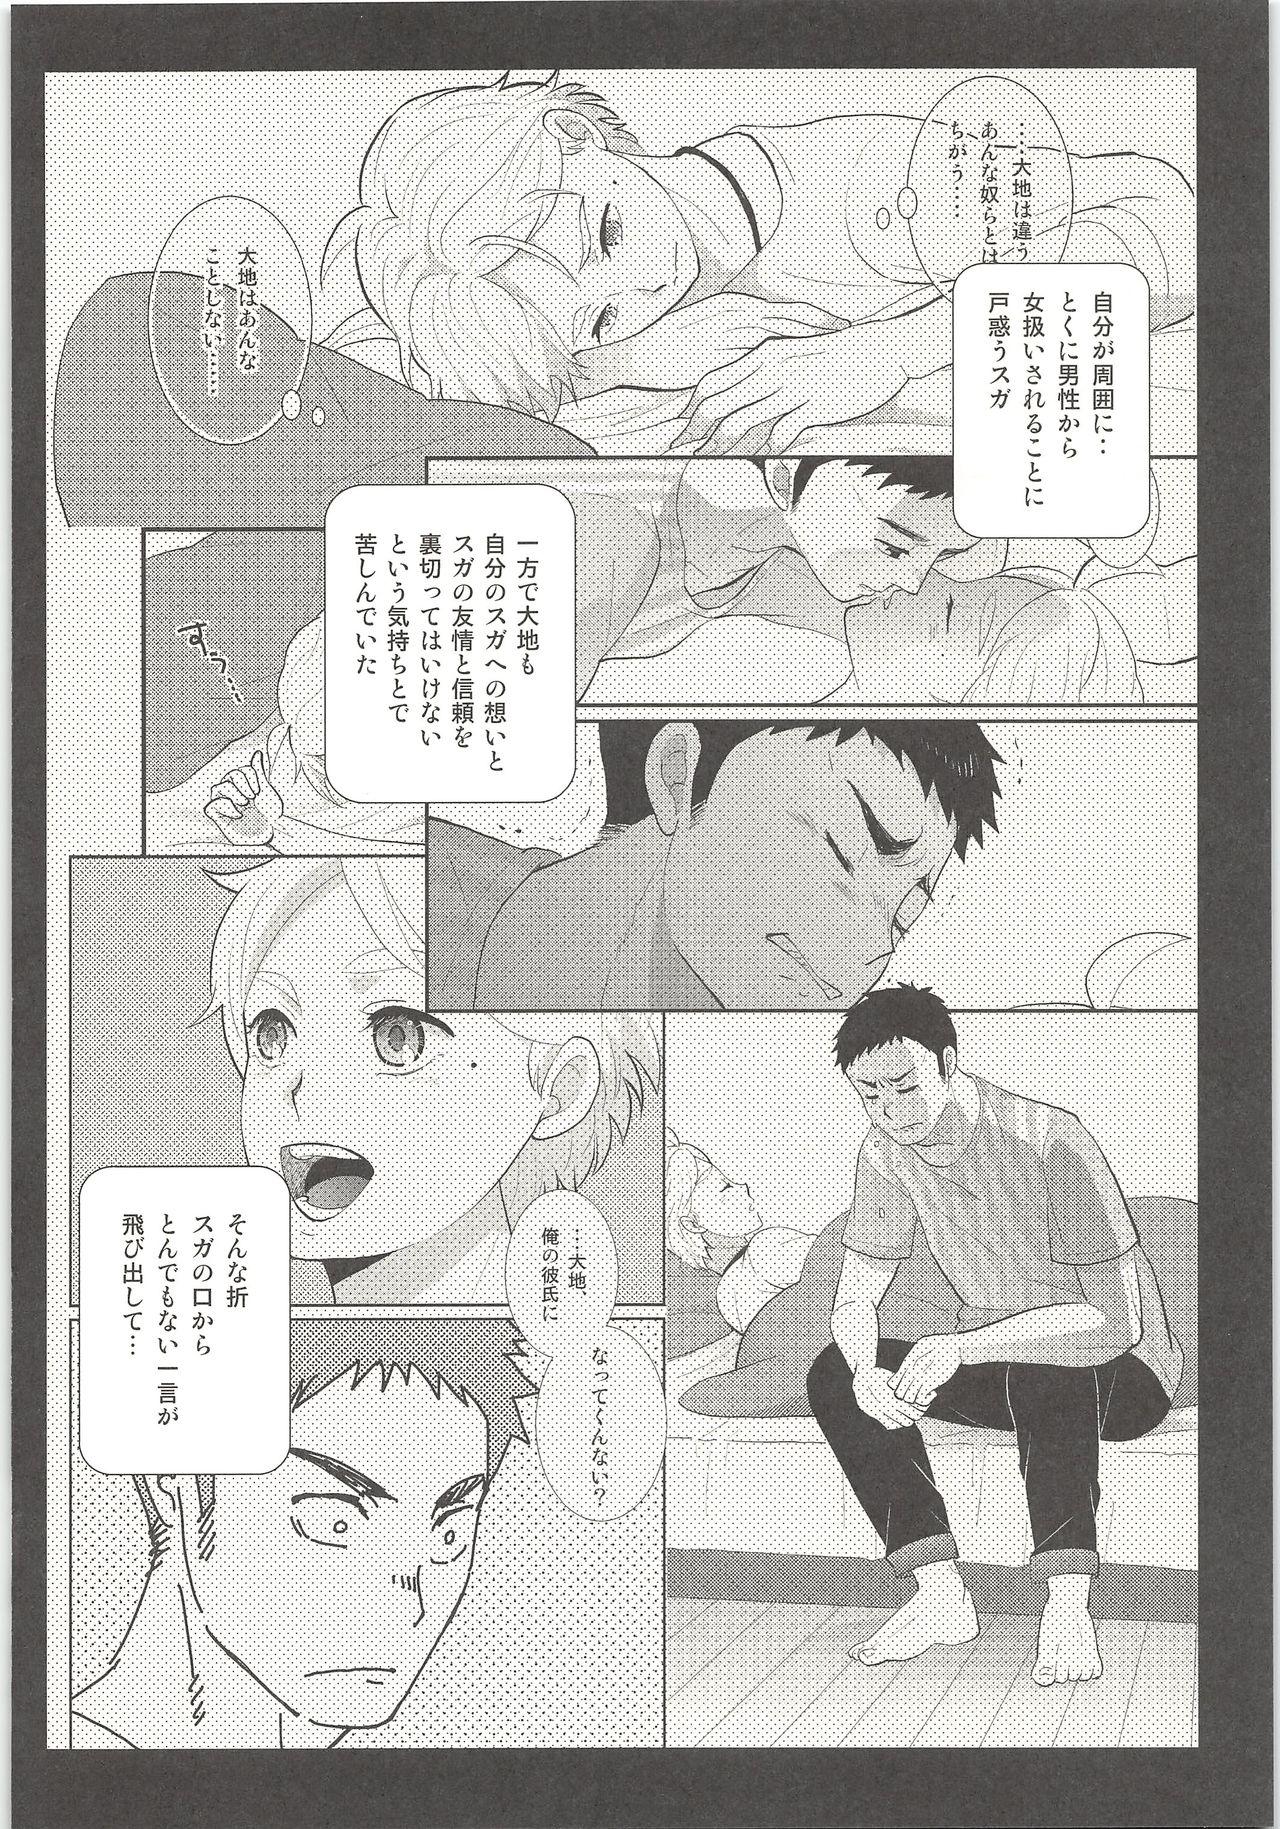 Chibola Kimi wa Tomodachi 2 - Haikyuu Tattooed - Page 3